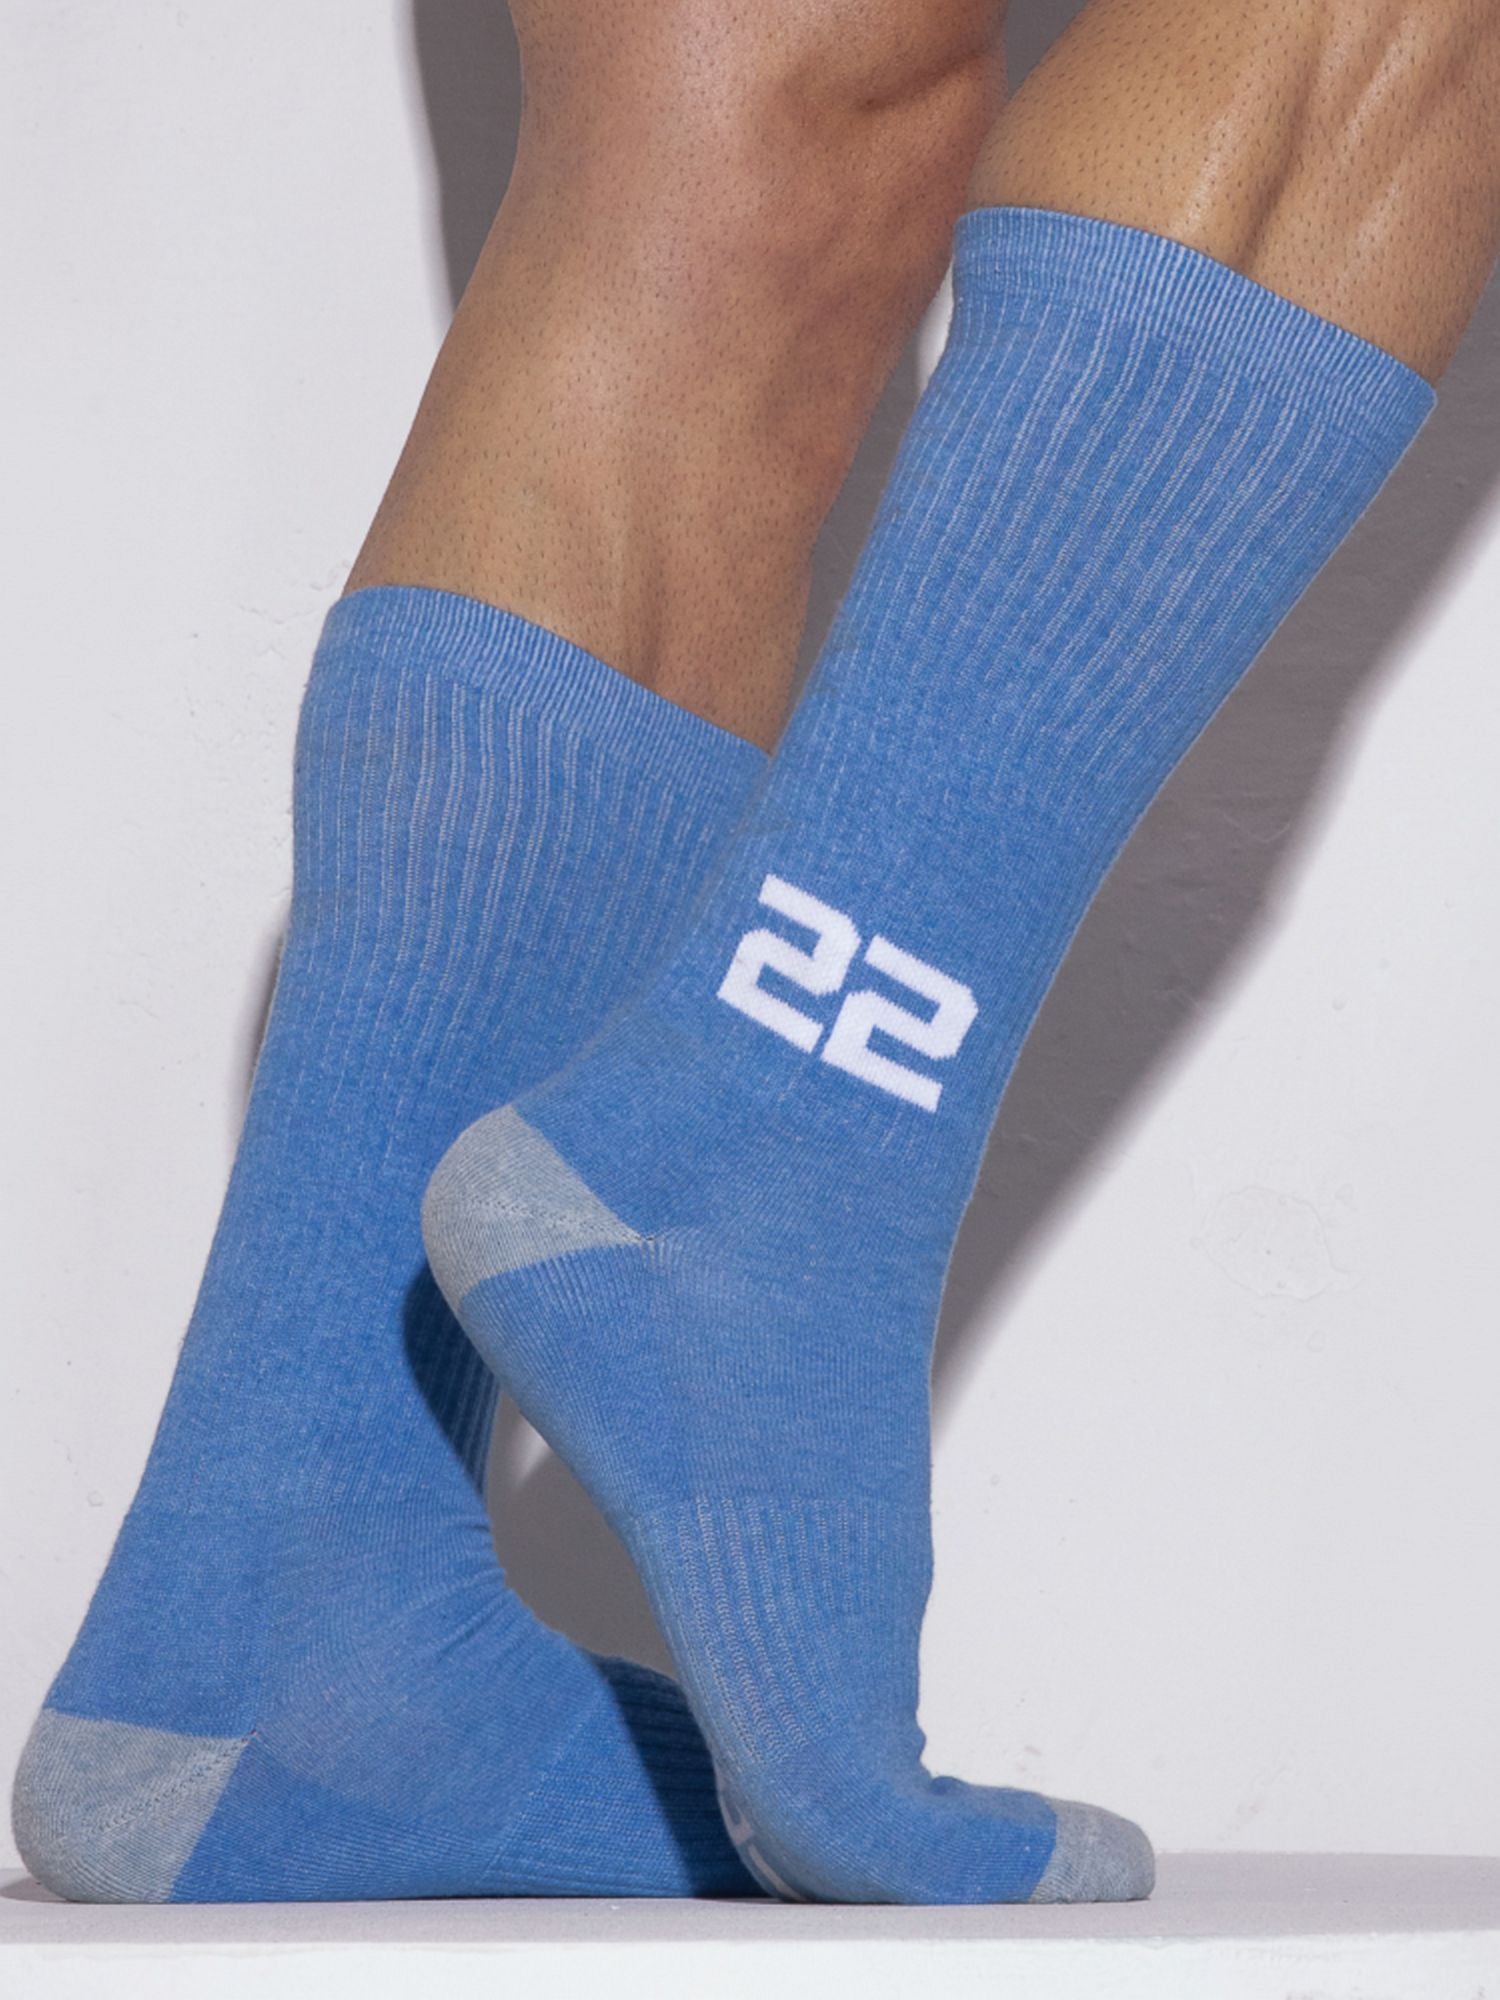 CODE 22 VINTAGE SOCKS 8018 - Herren Sport Socken, Stutzen - noodosz - Code 22 - Unterwäsche & Socken